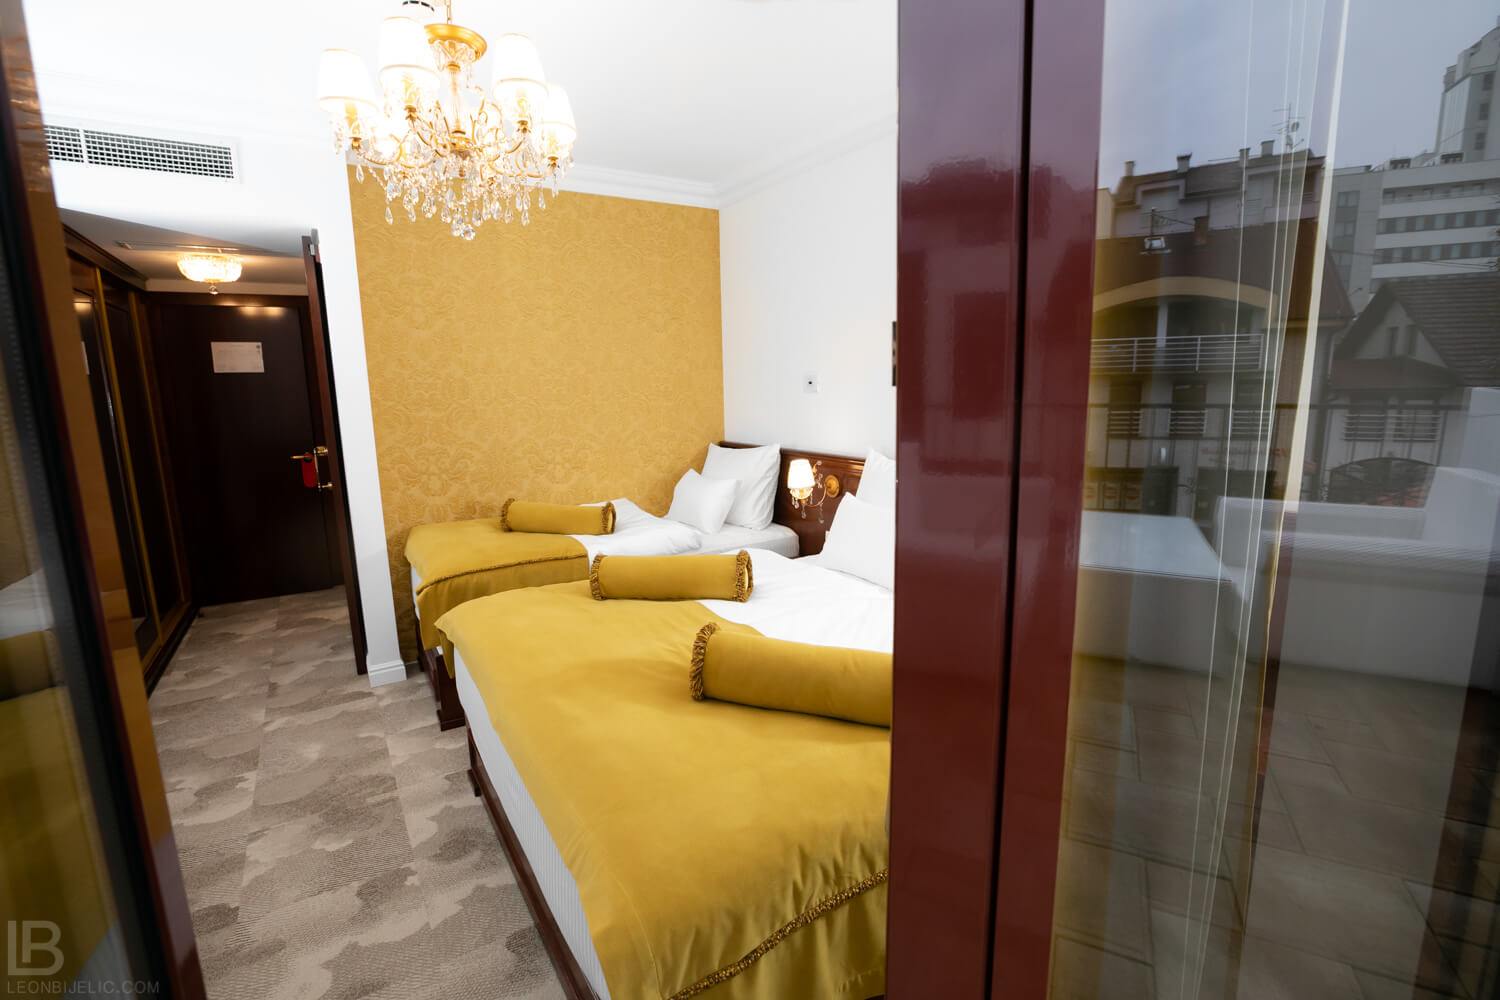 Hotel Integra Banja Luka - Rooms photos - Sobe slike najbolji hotel grad - Apartmani nocenje